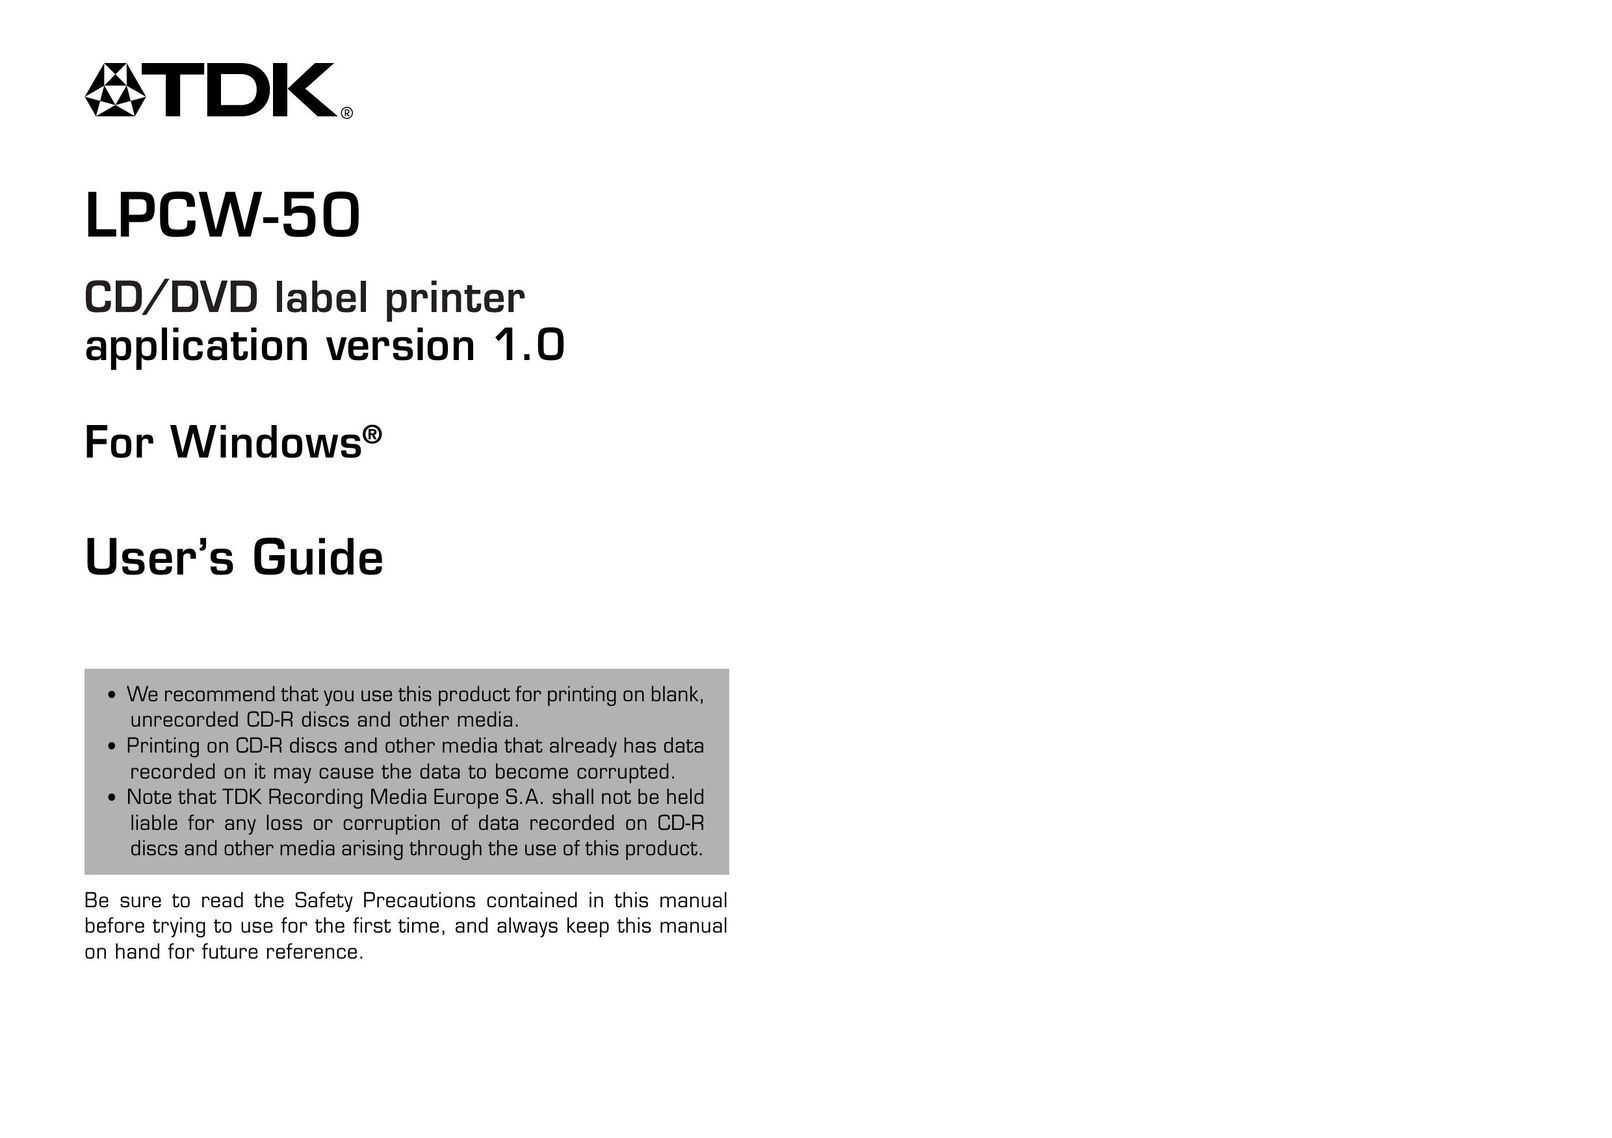 Casio LPCW-50 Printer User Manual